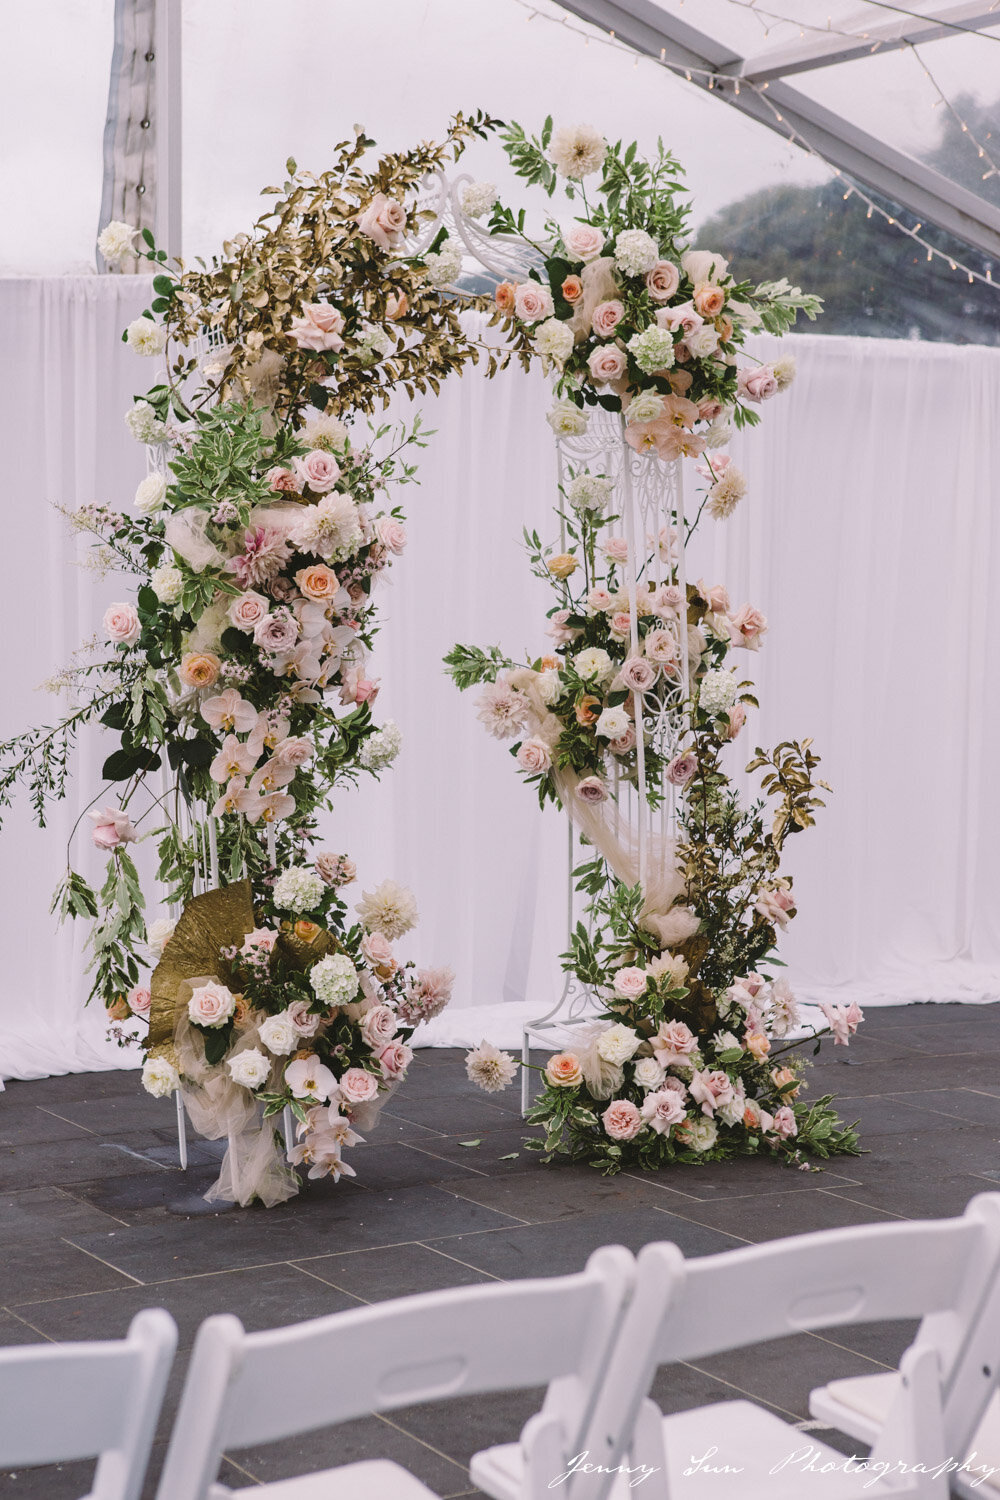 Sydney-Wedding-Stylist-Planner-florist-pricing-jennysun-pierone.jpg